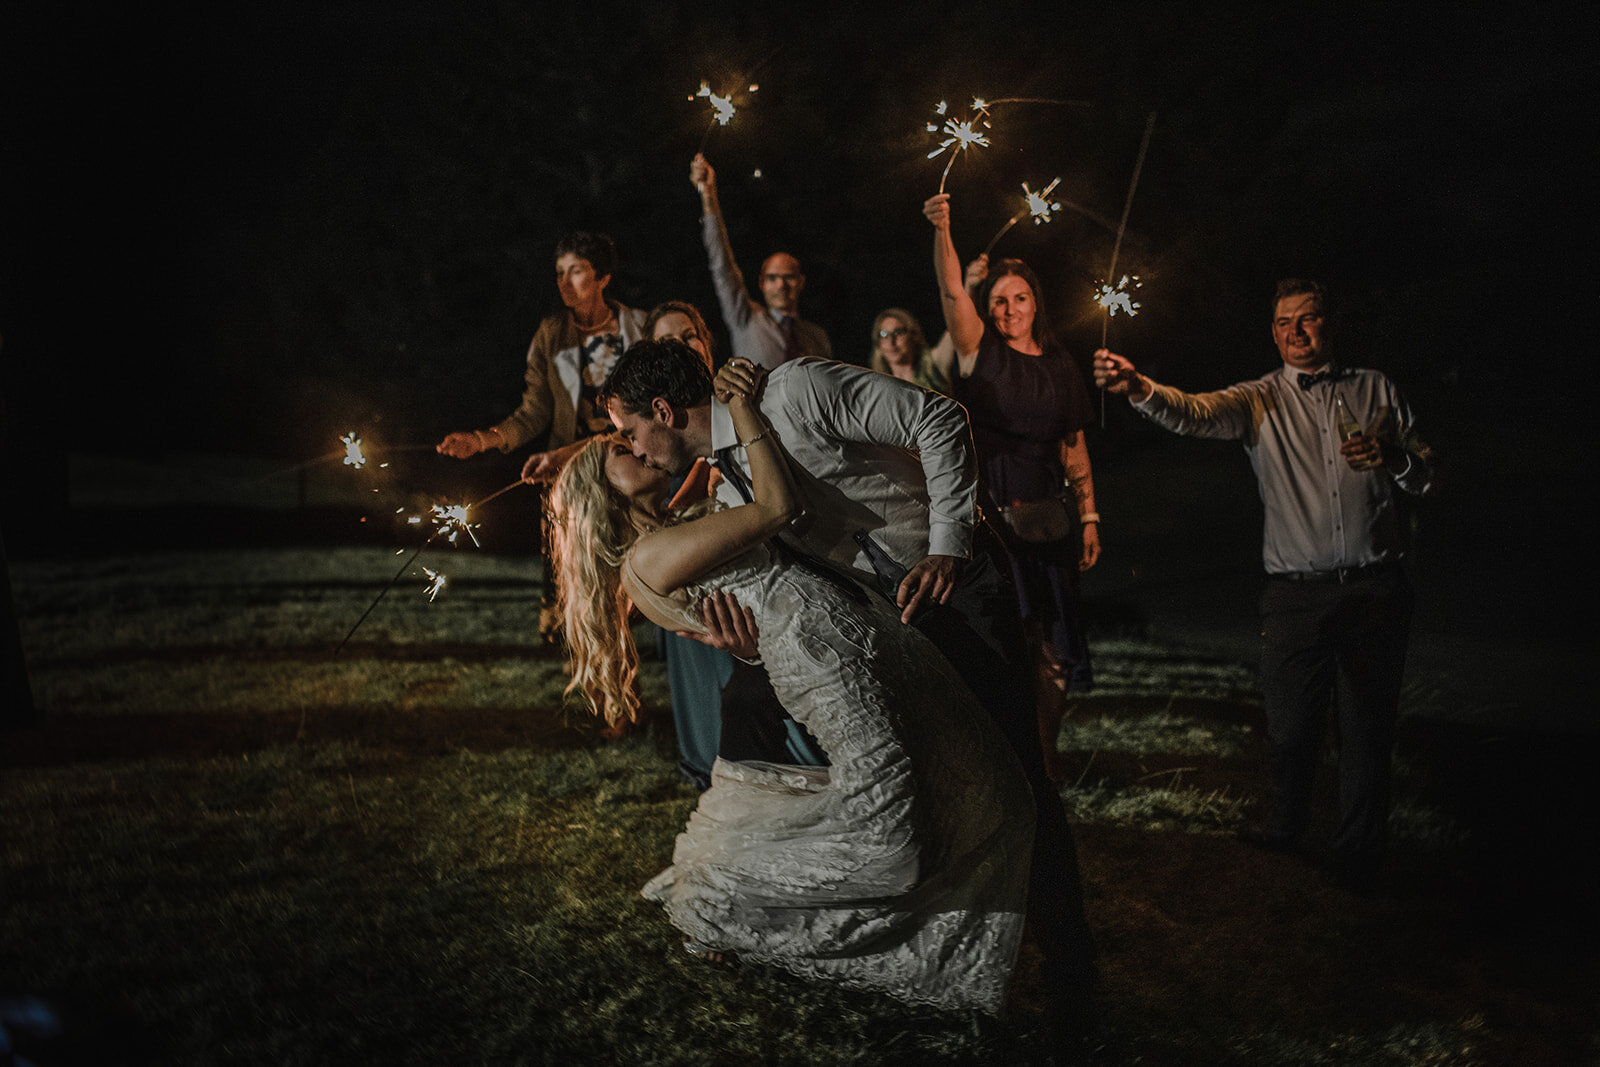 Group wedding shot with sparkles at a back garden wedding